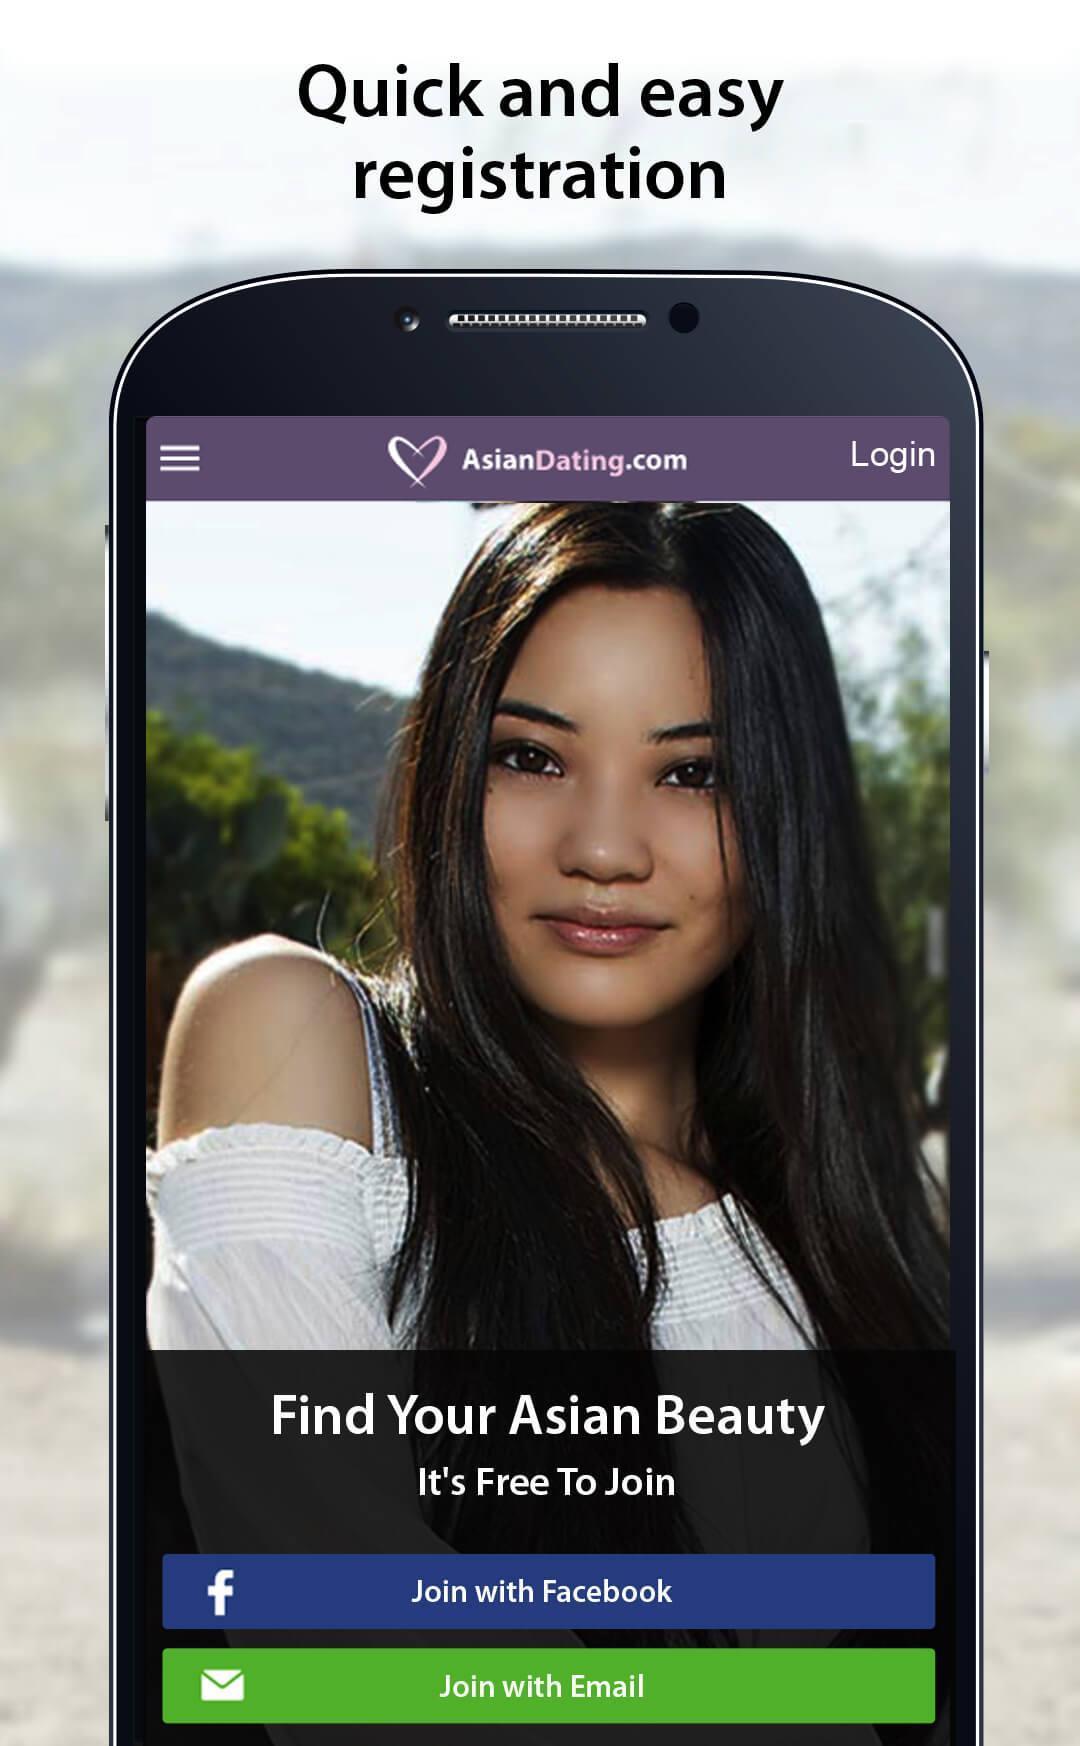 Asian dating login and password